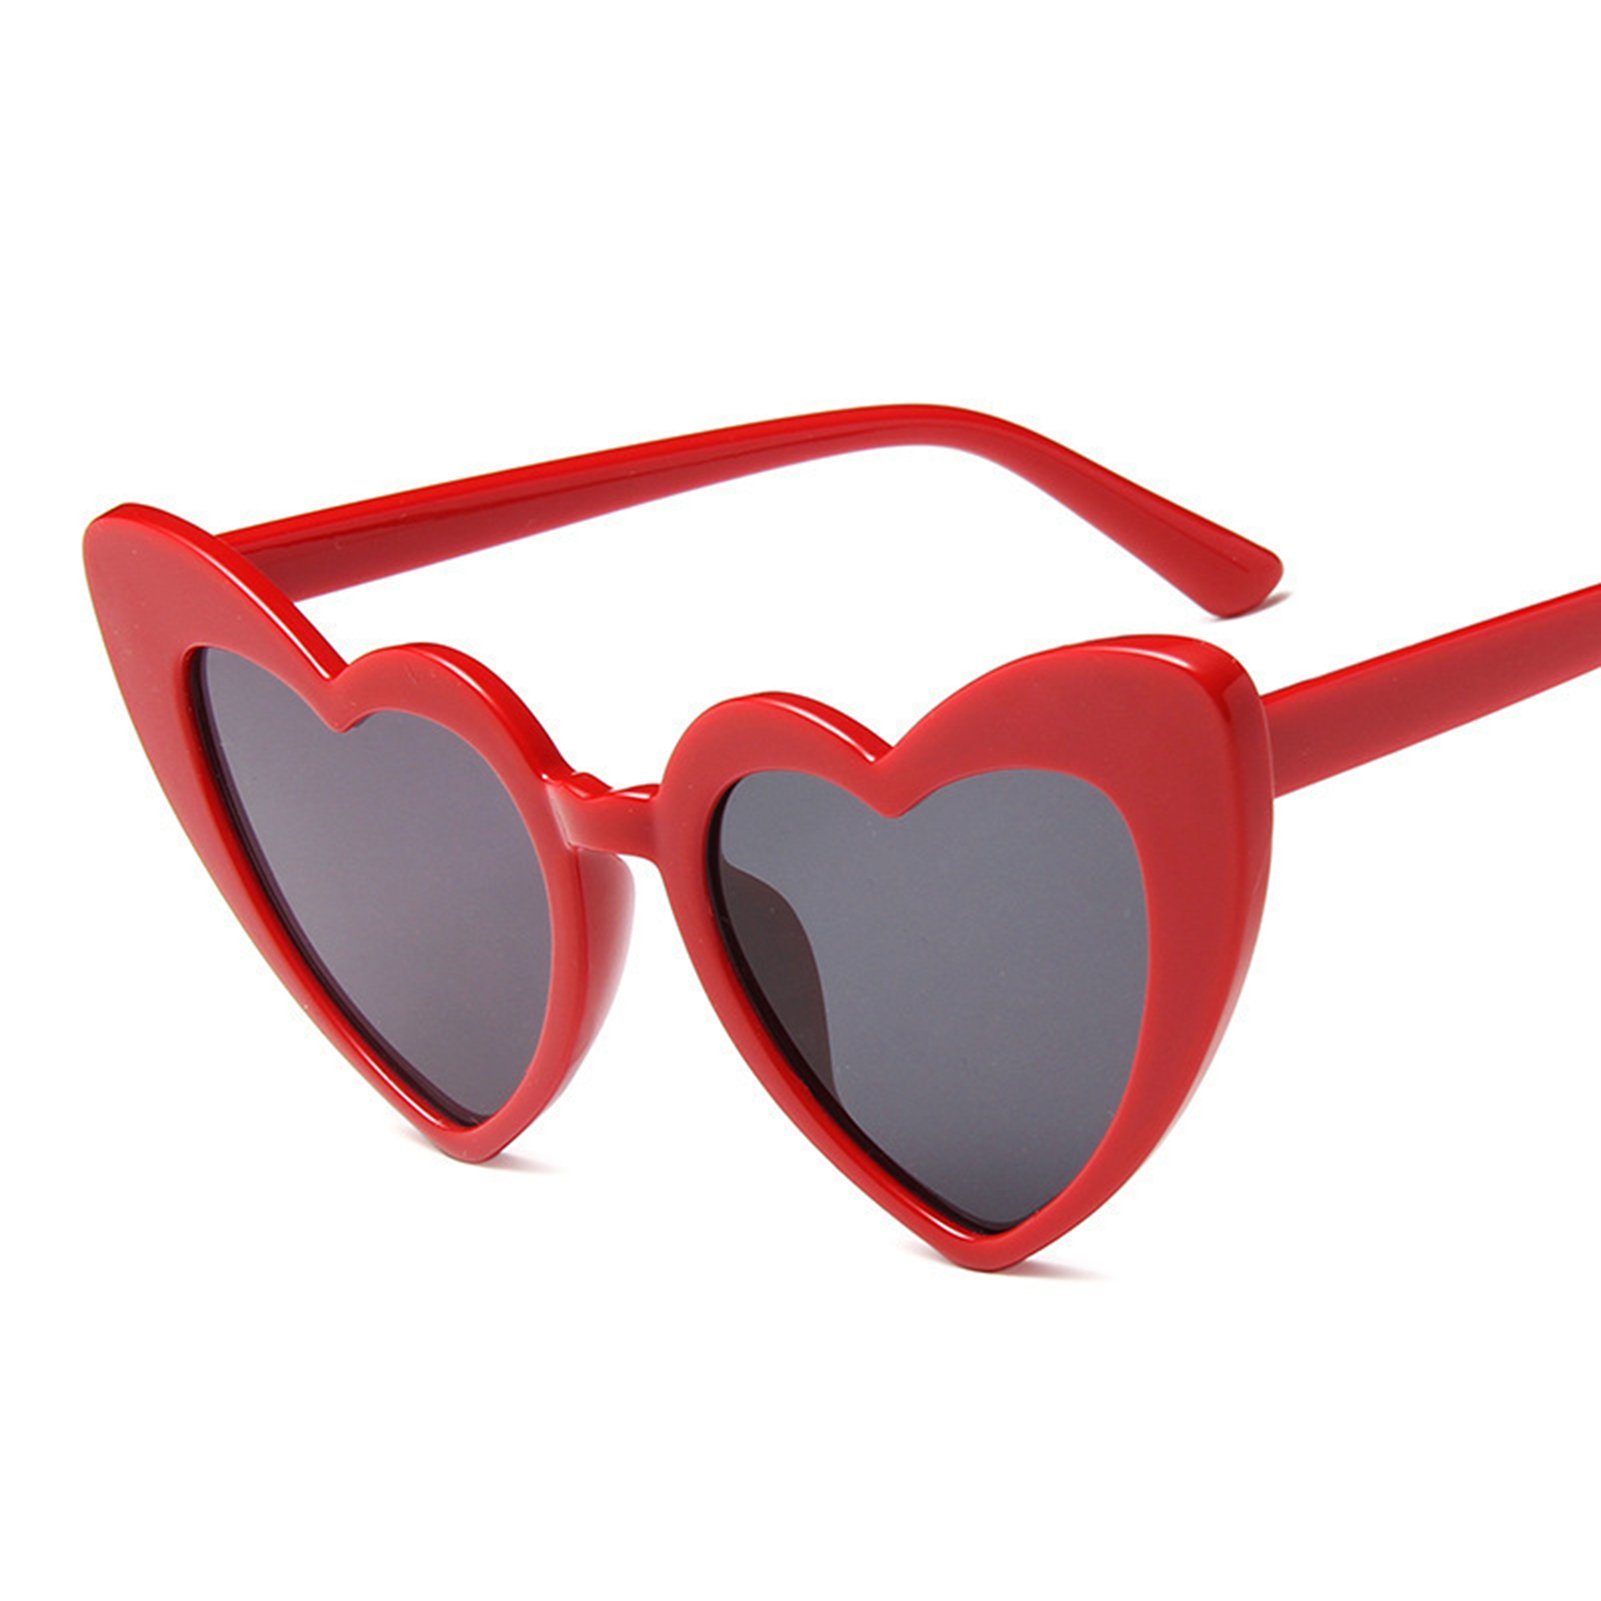 Blusmart In Blendfrei Vintage-Stil, red Retrosonnenbrille Damen-Sonnenbrille Herzform,